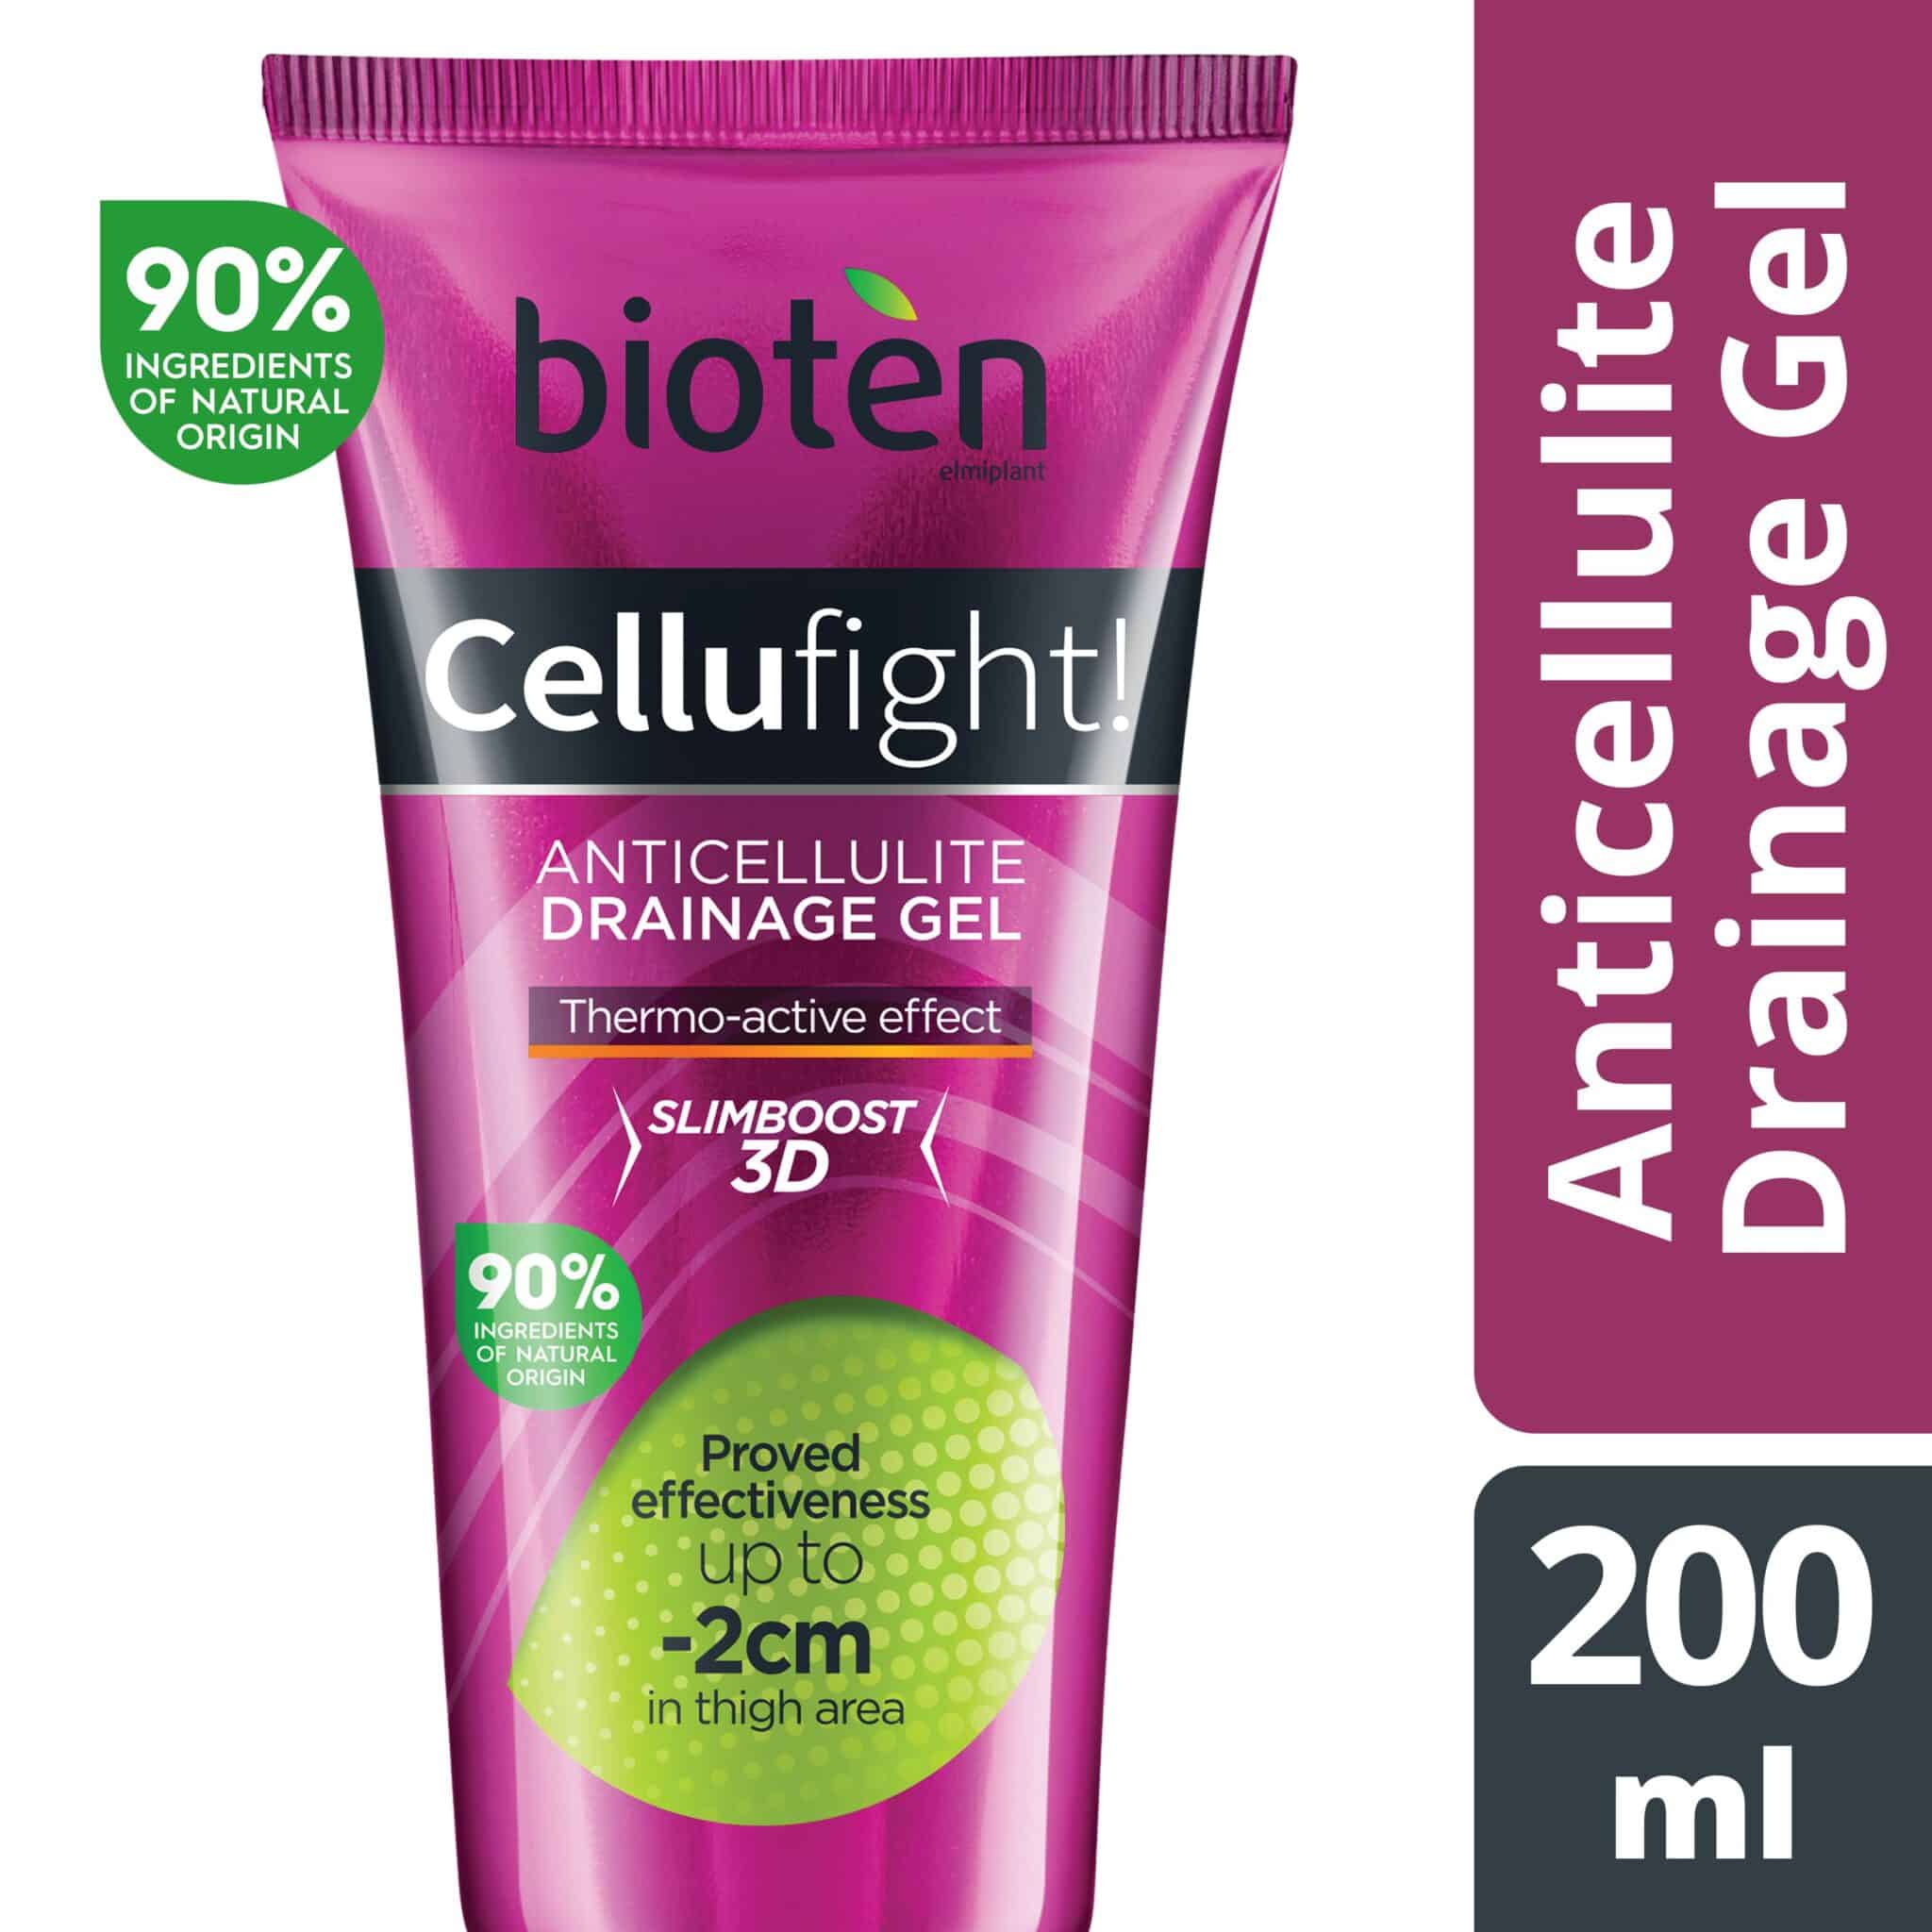 Bioten cellufight gel κατά της κυτταρίτιδας 200ml